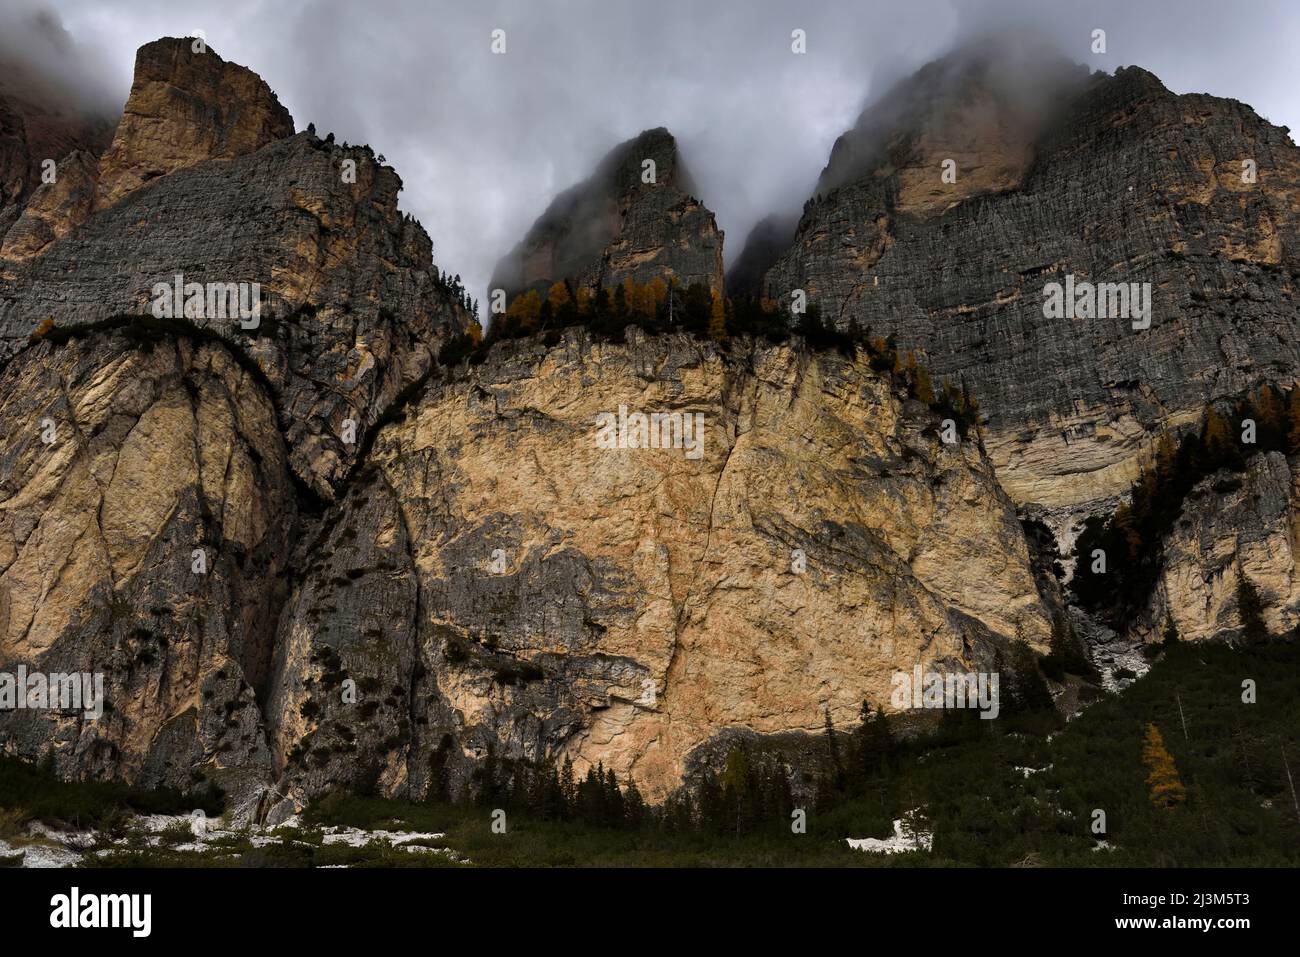 Conturines Spitze dans les Dolomites italiens. ; Cortina d'Ampezzo, Dolomites, Italie. Banque D'Images